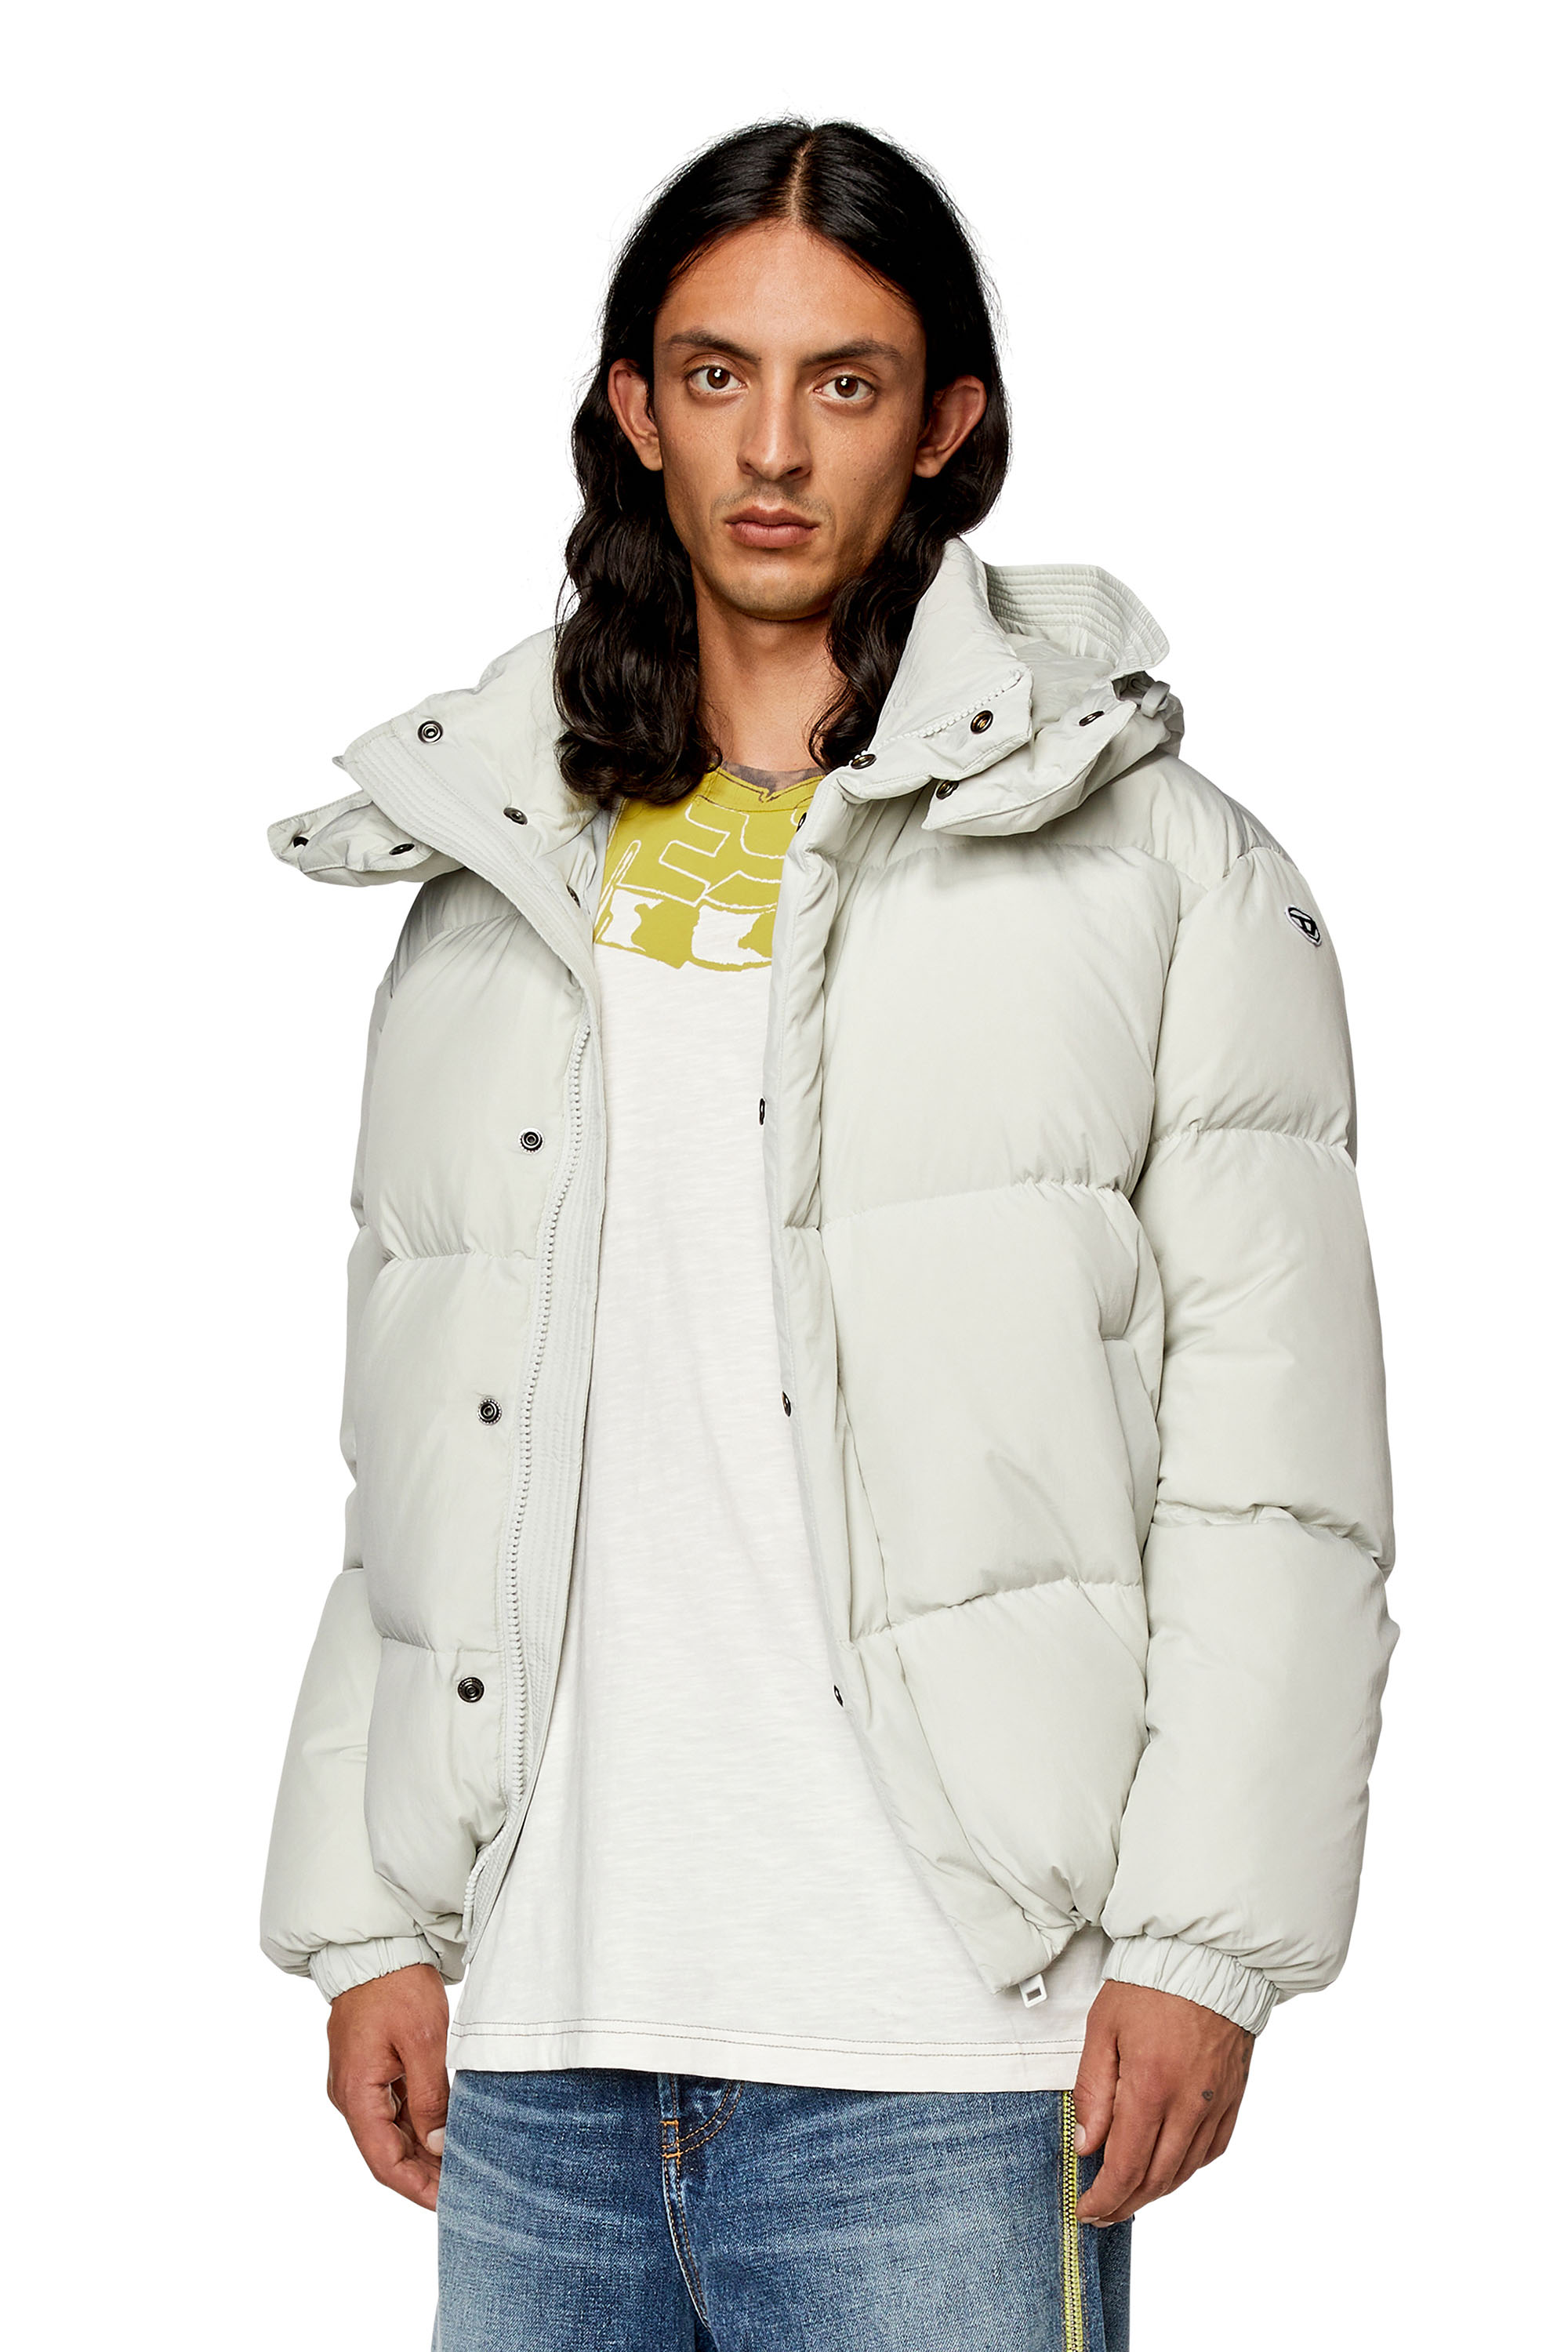 Men's Winter Jackets: Down Jackets, Parkas, Raincoats | Diesel ®